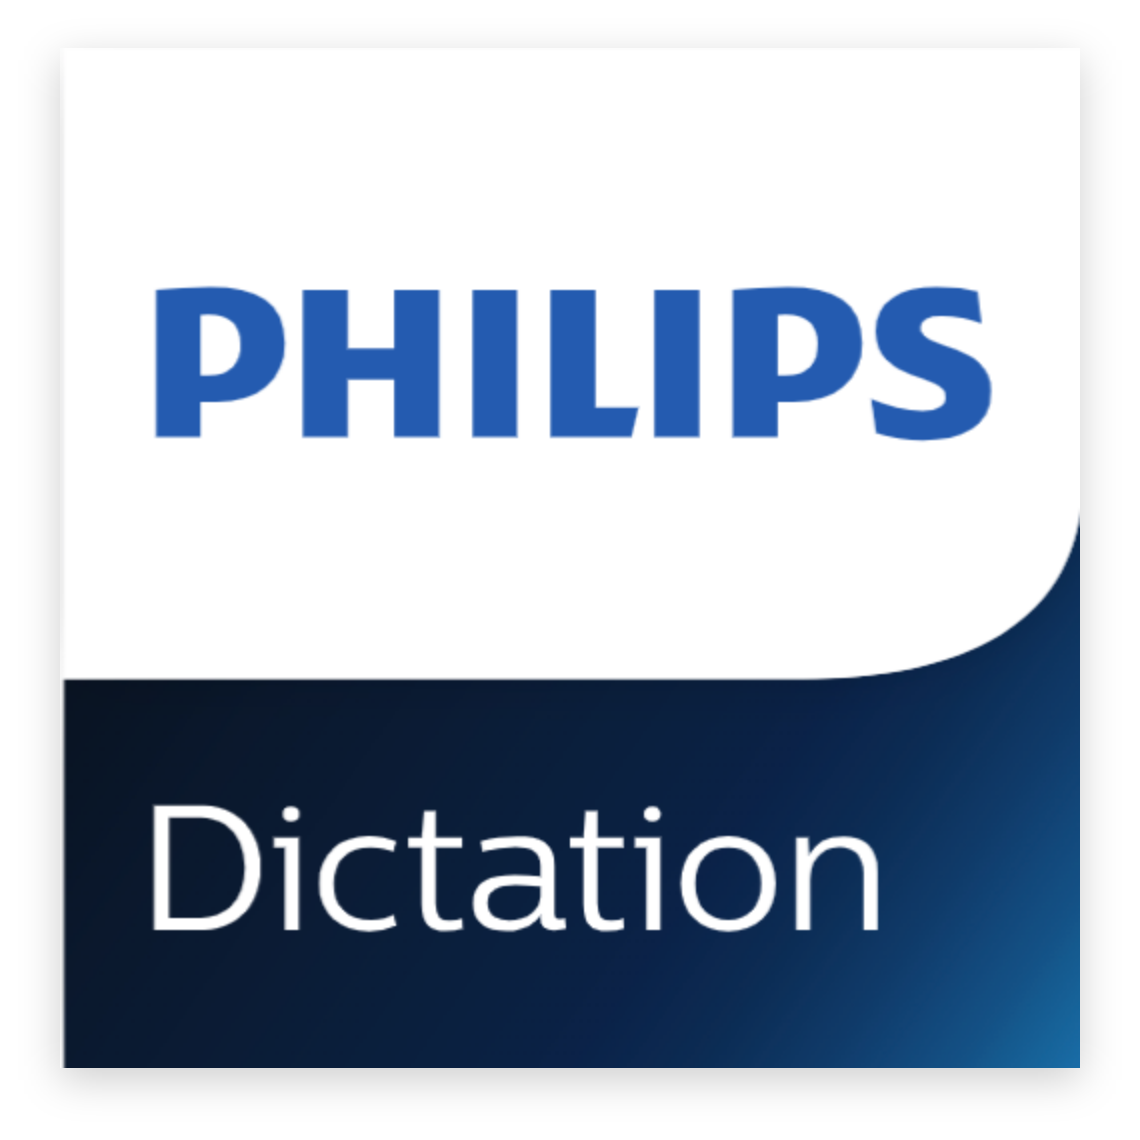 Philips Dictation